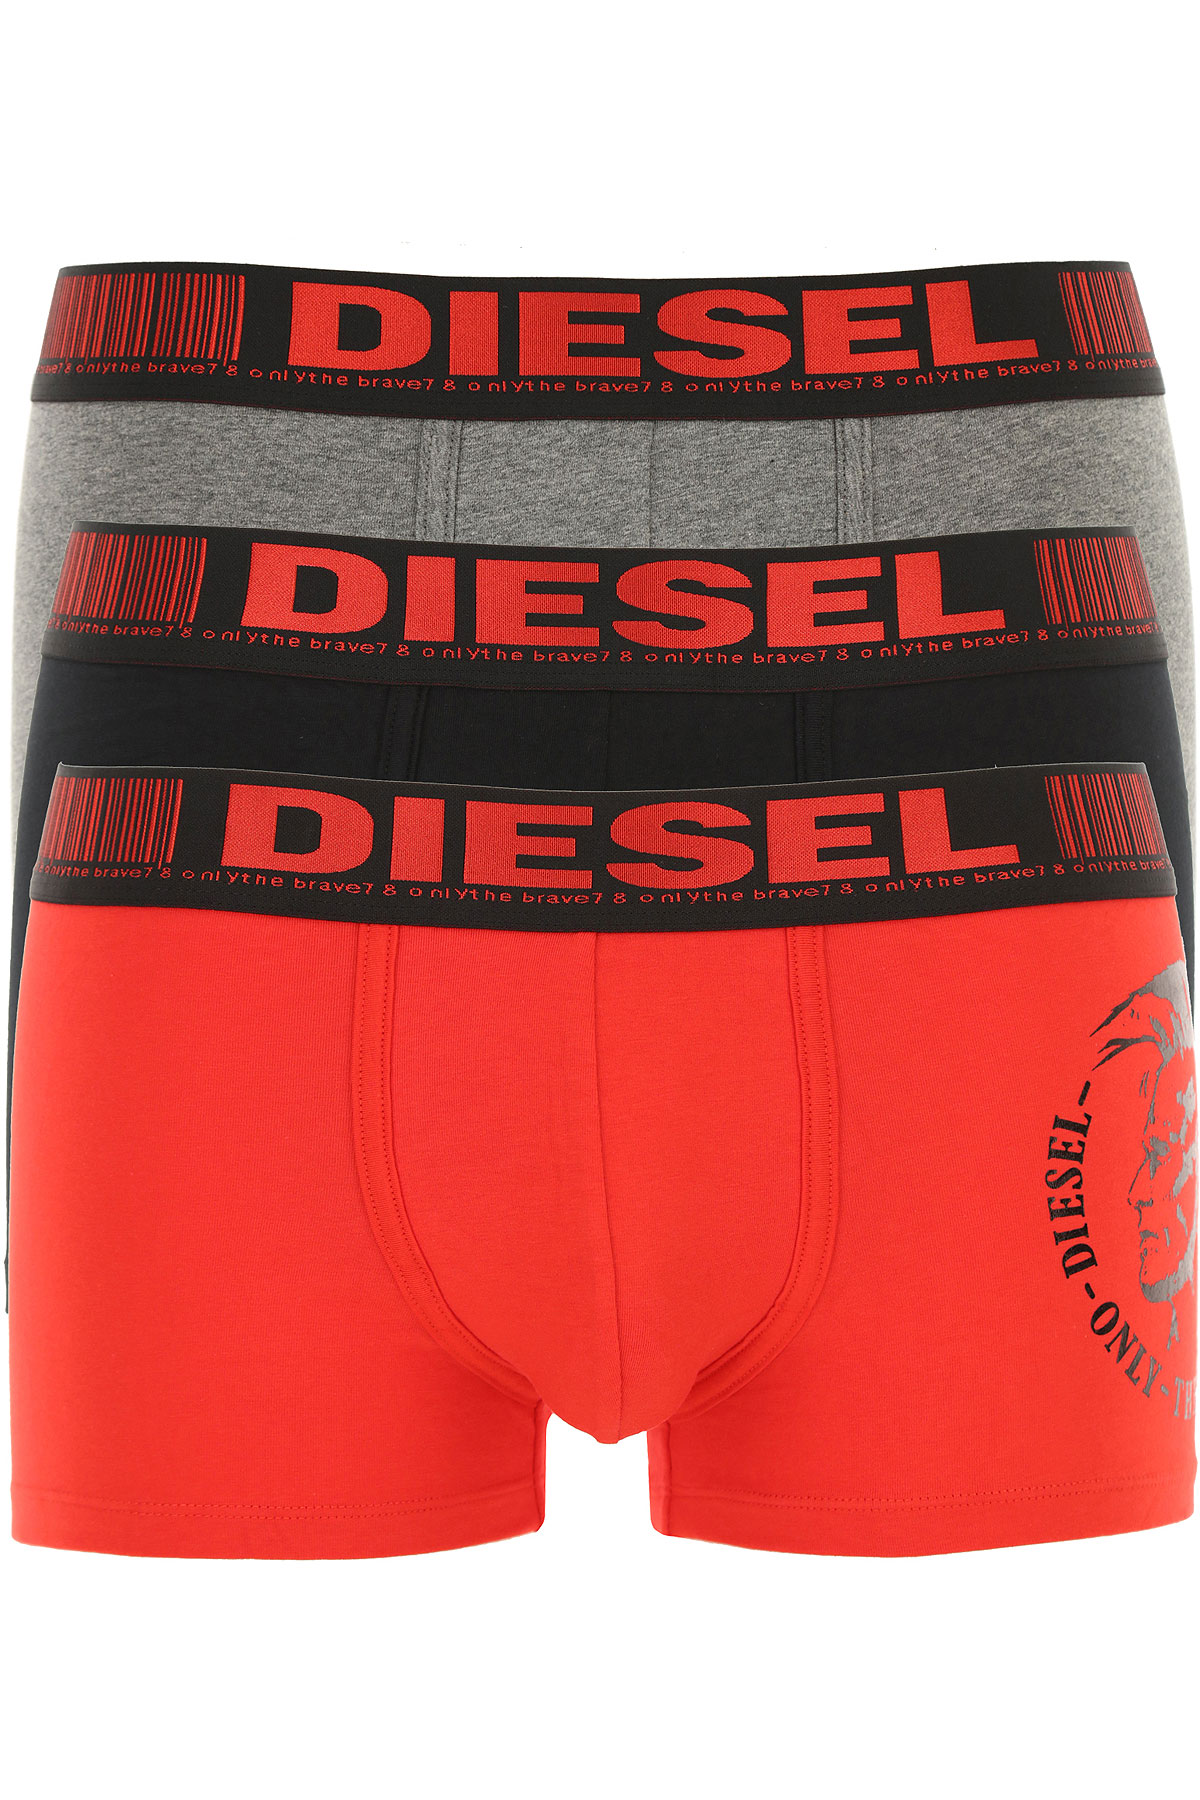 Lingerie para Homem Diesel, Detalhe do Modelo: 00st3v-0iaze-e5120